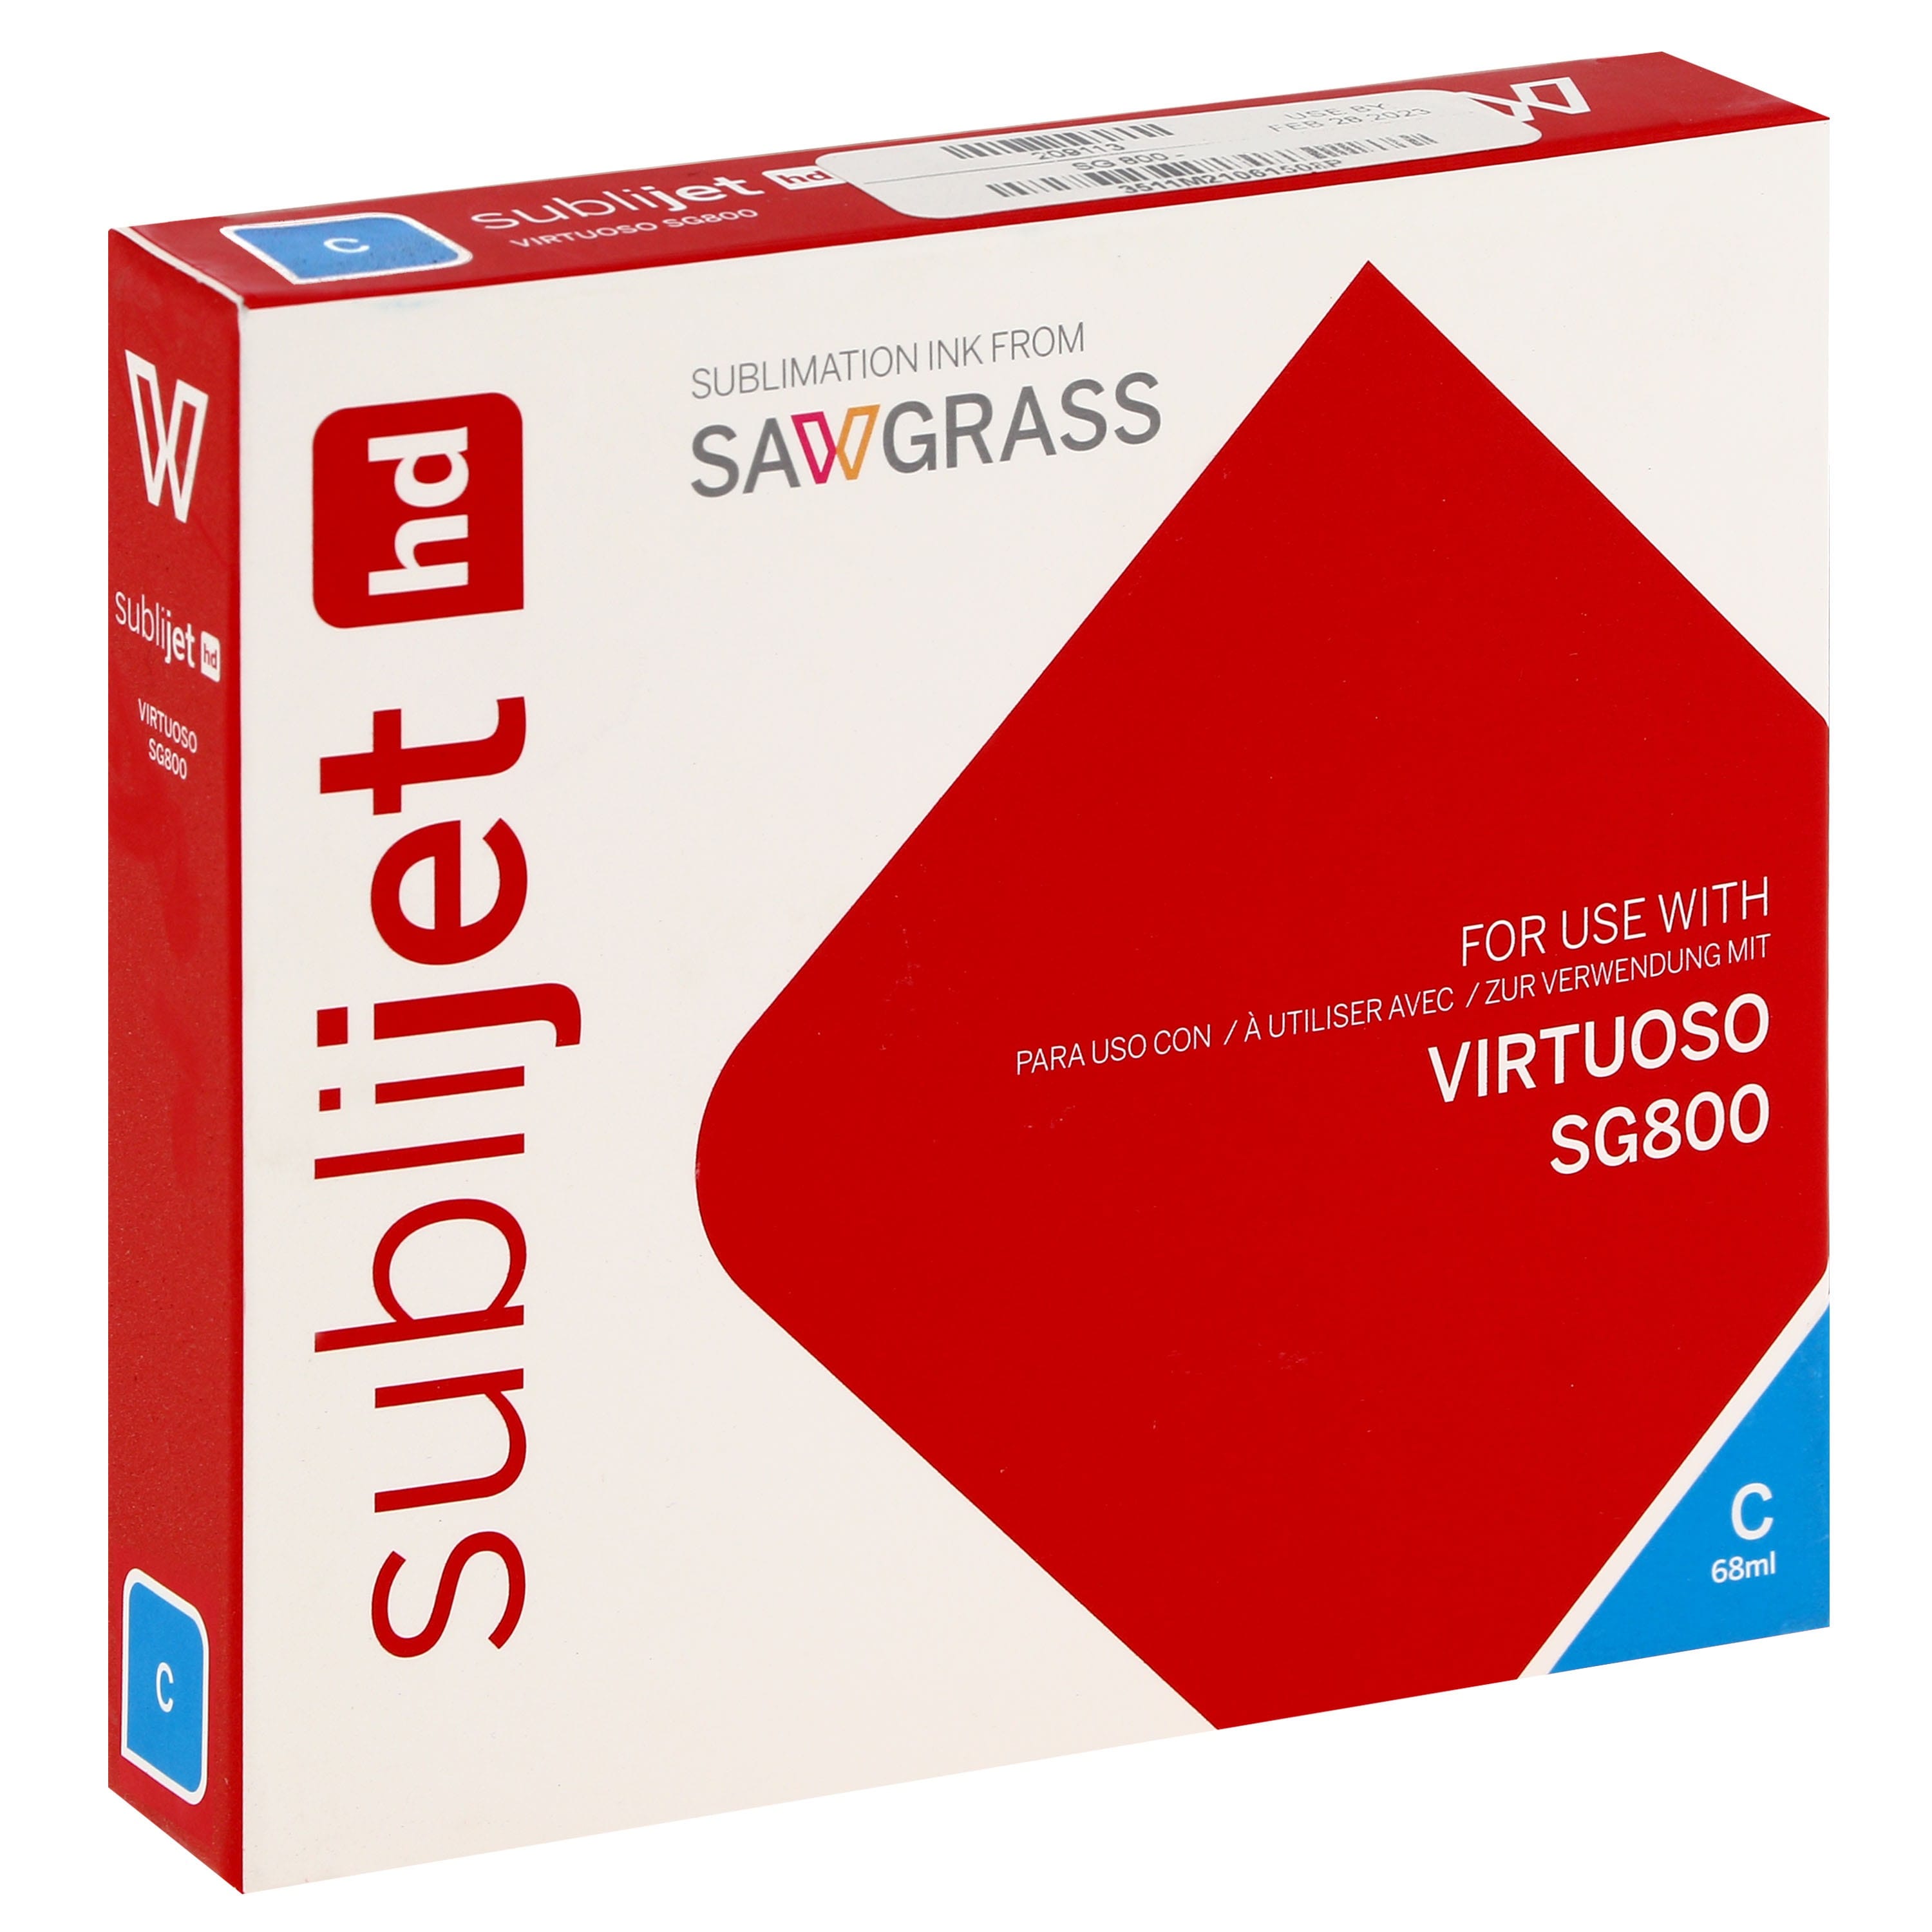 SAWGRASS - Encre sublimation Sublijet - Cyan 68ml - pour Sawgrass SG800